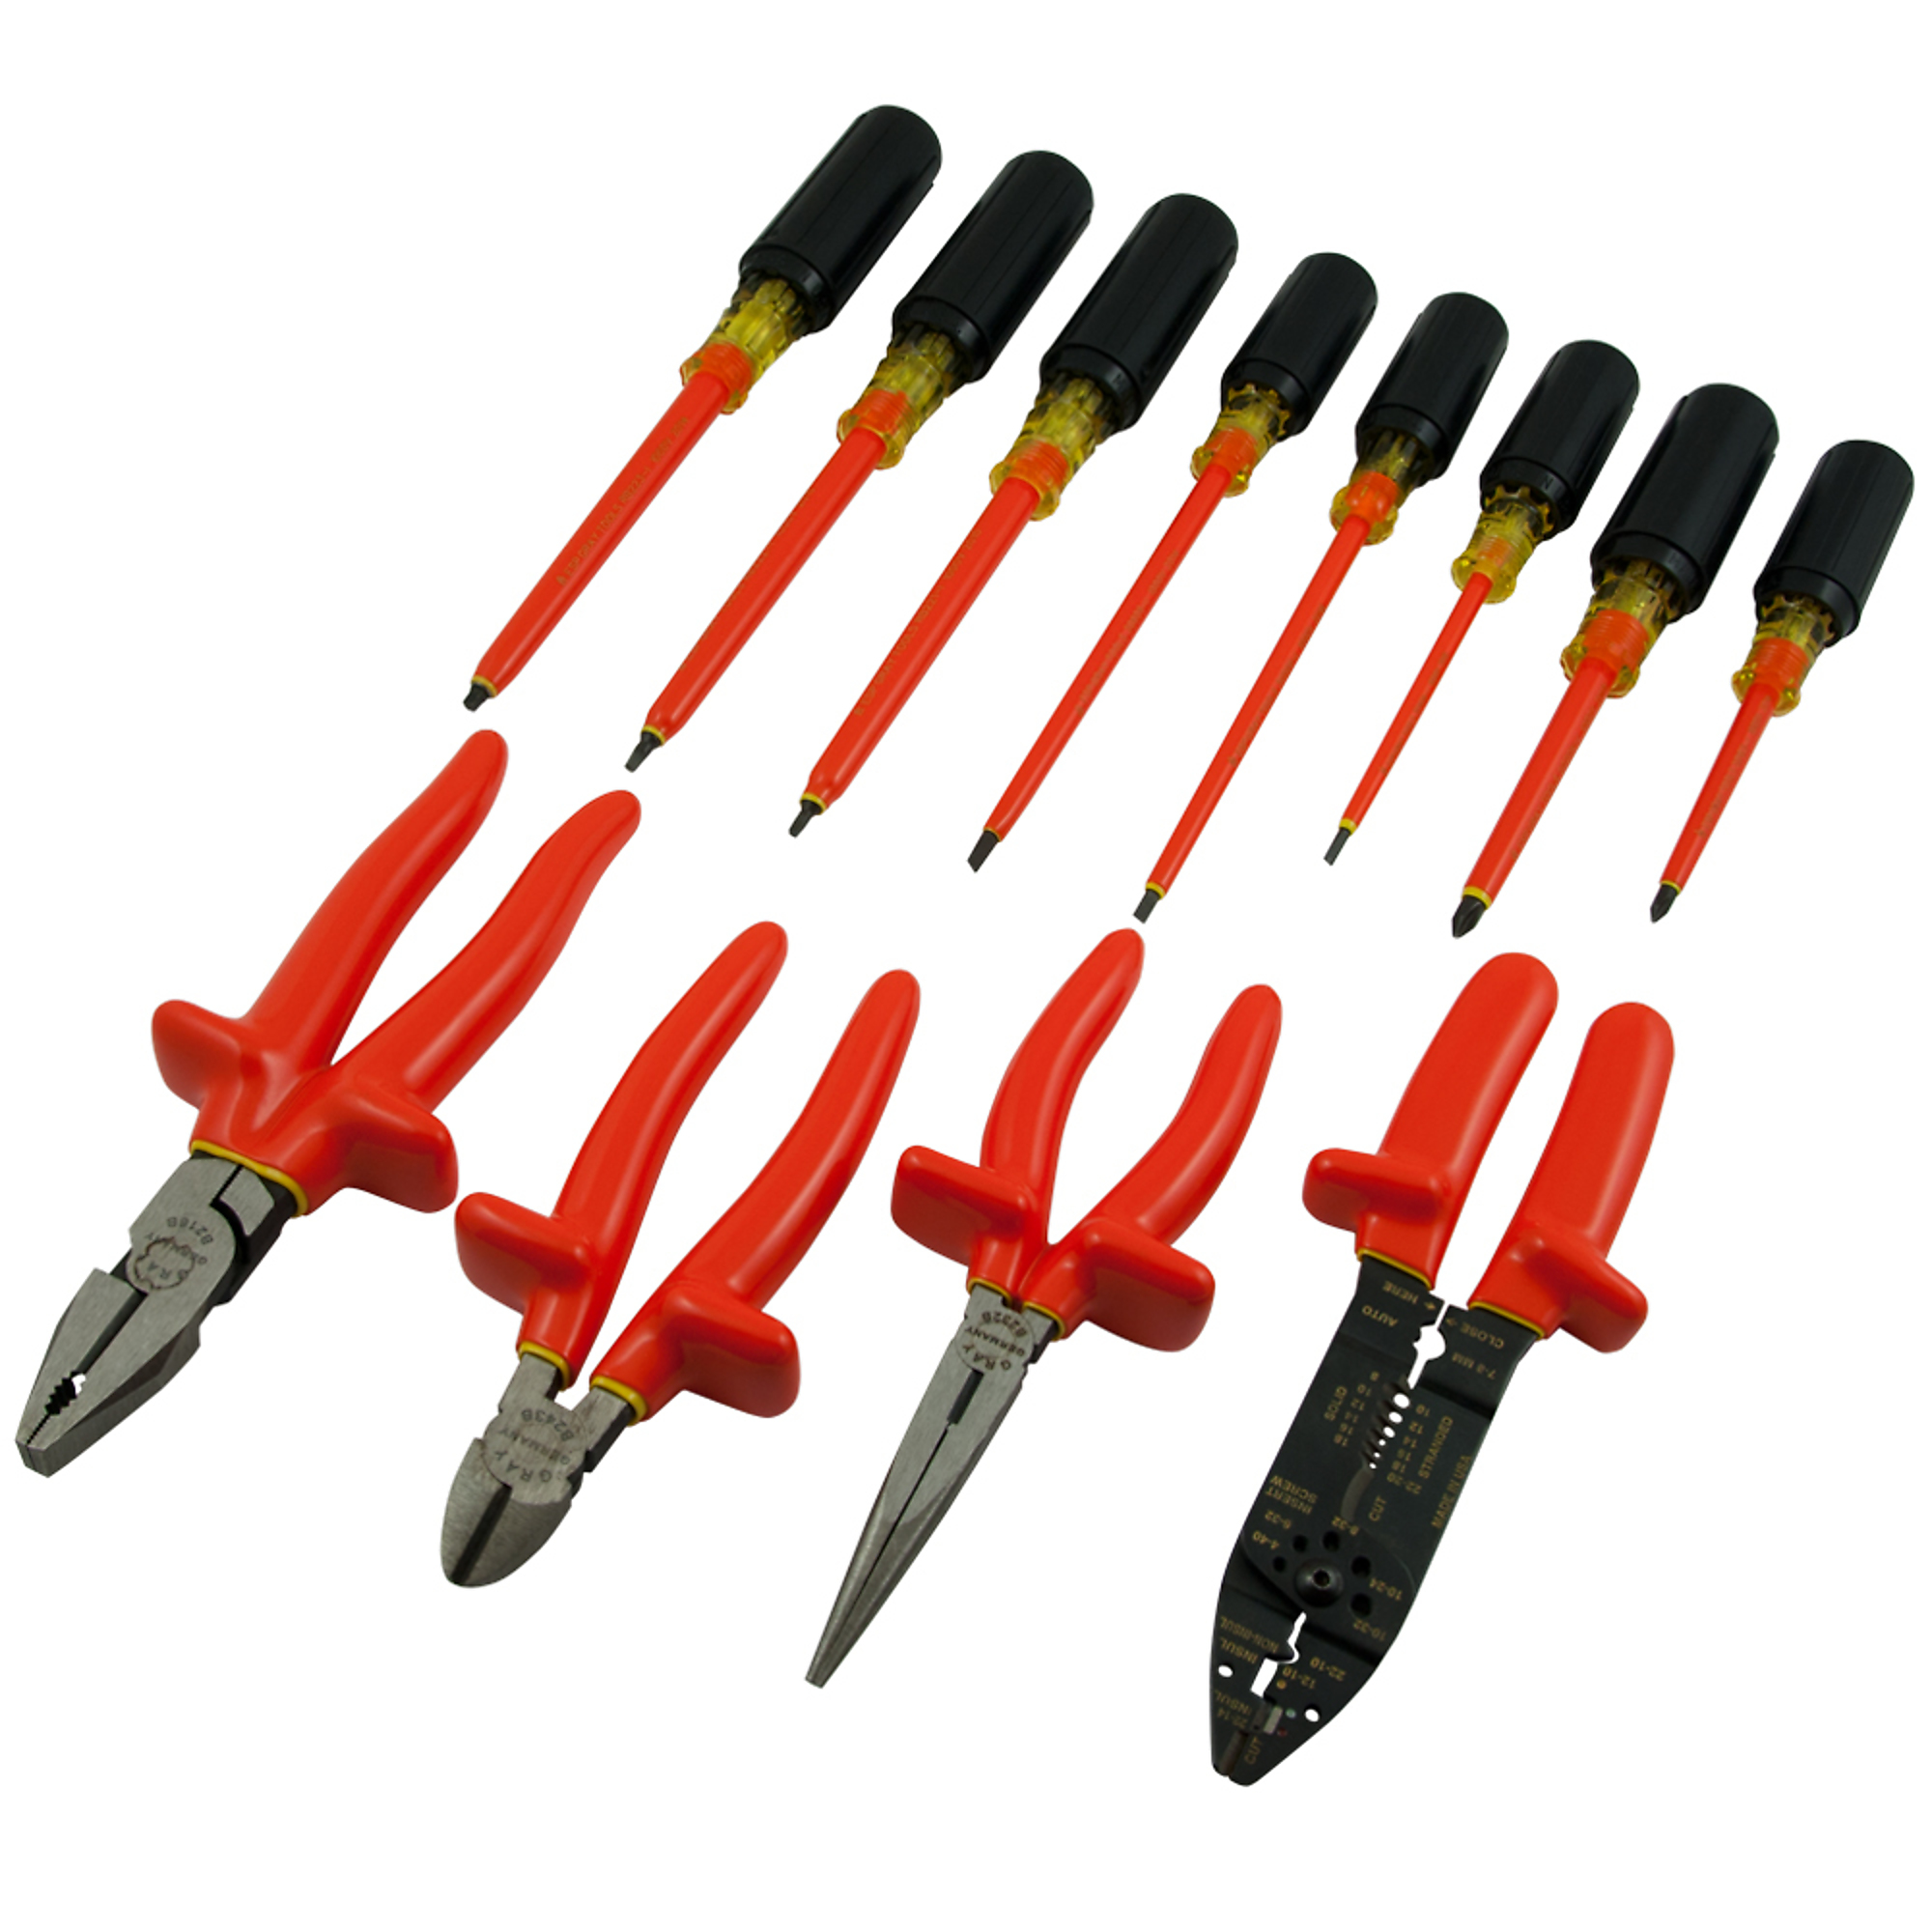 Gray Tools, 12 Piece Screwdriver Pliers Set, 1000V Insulated, Pieces (qty.) 3 Model 86612-I